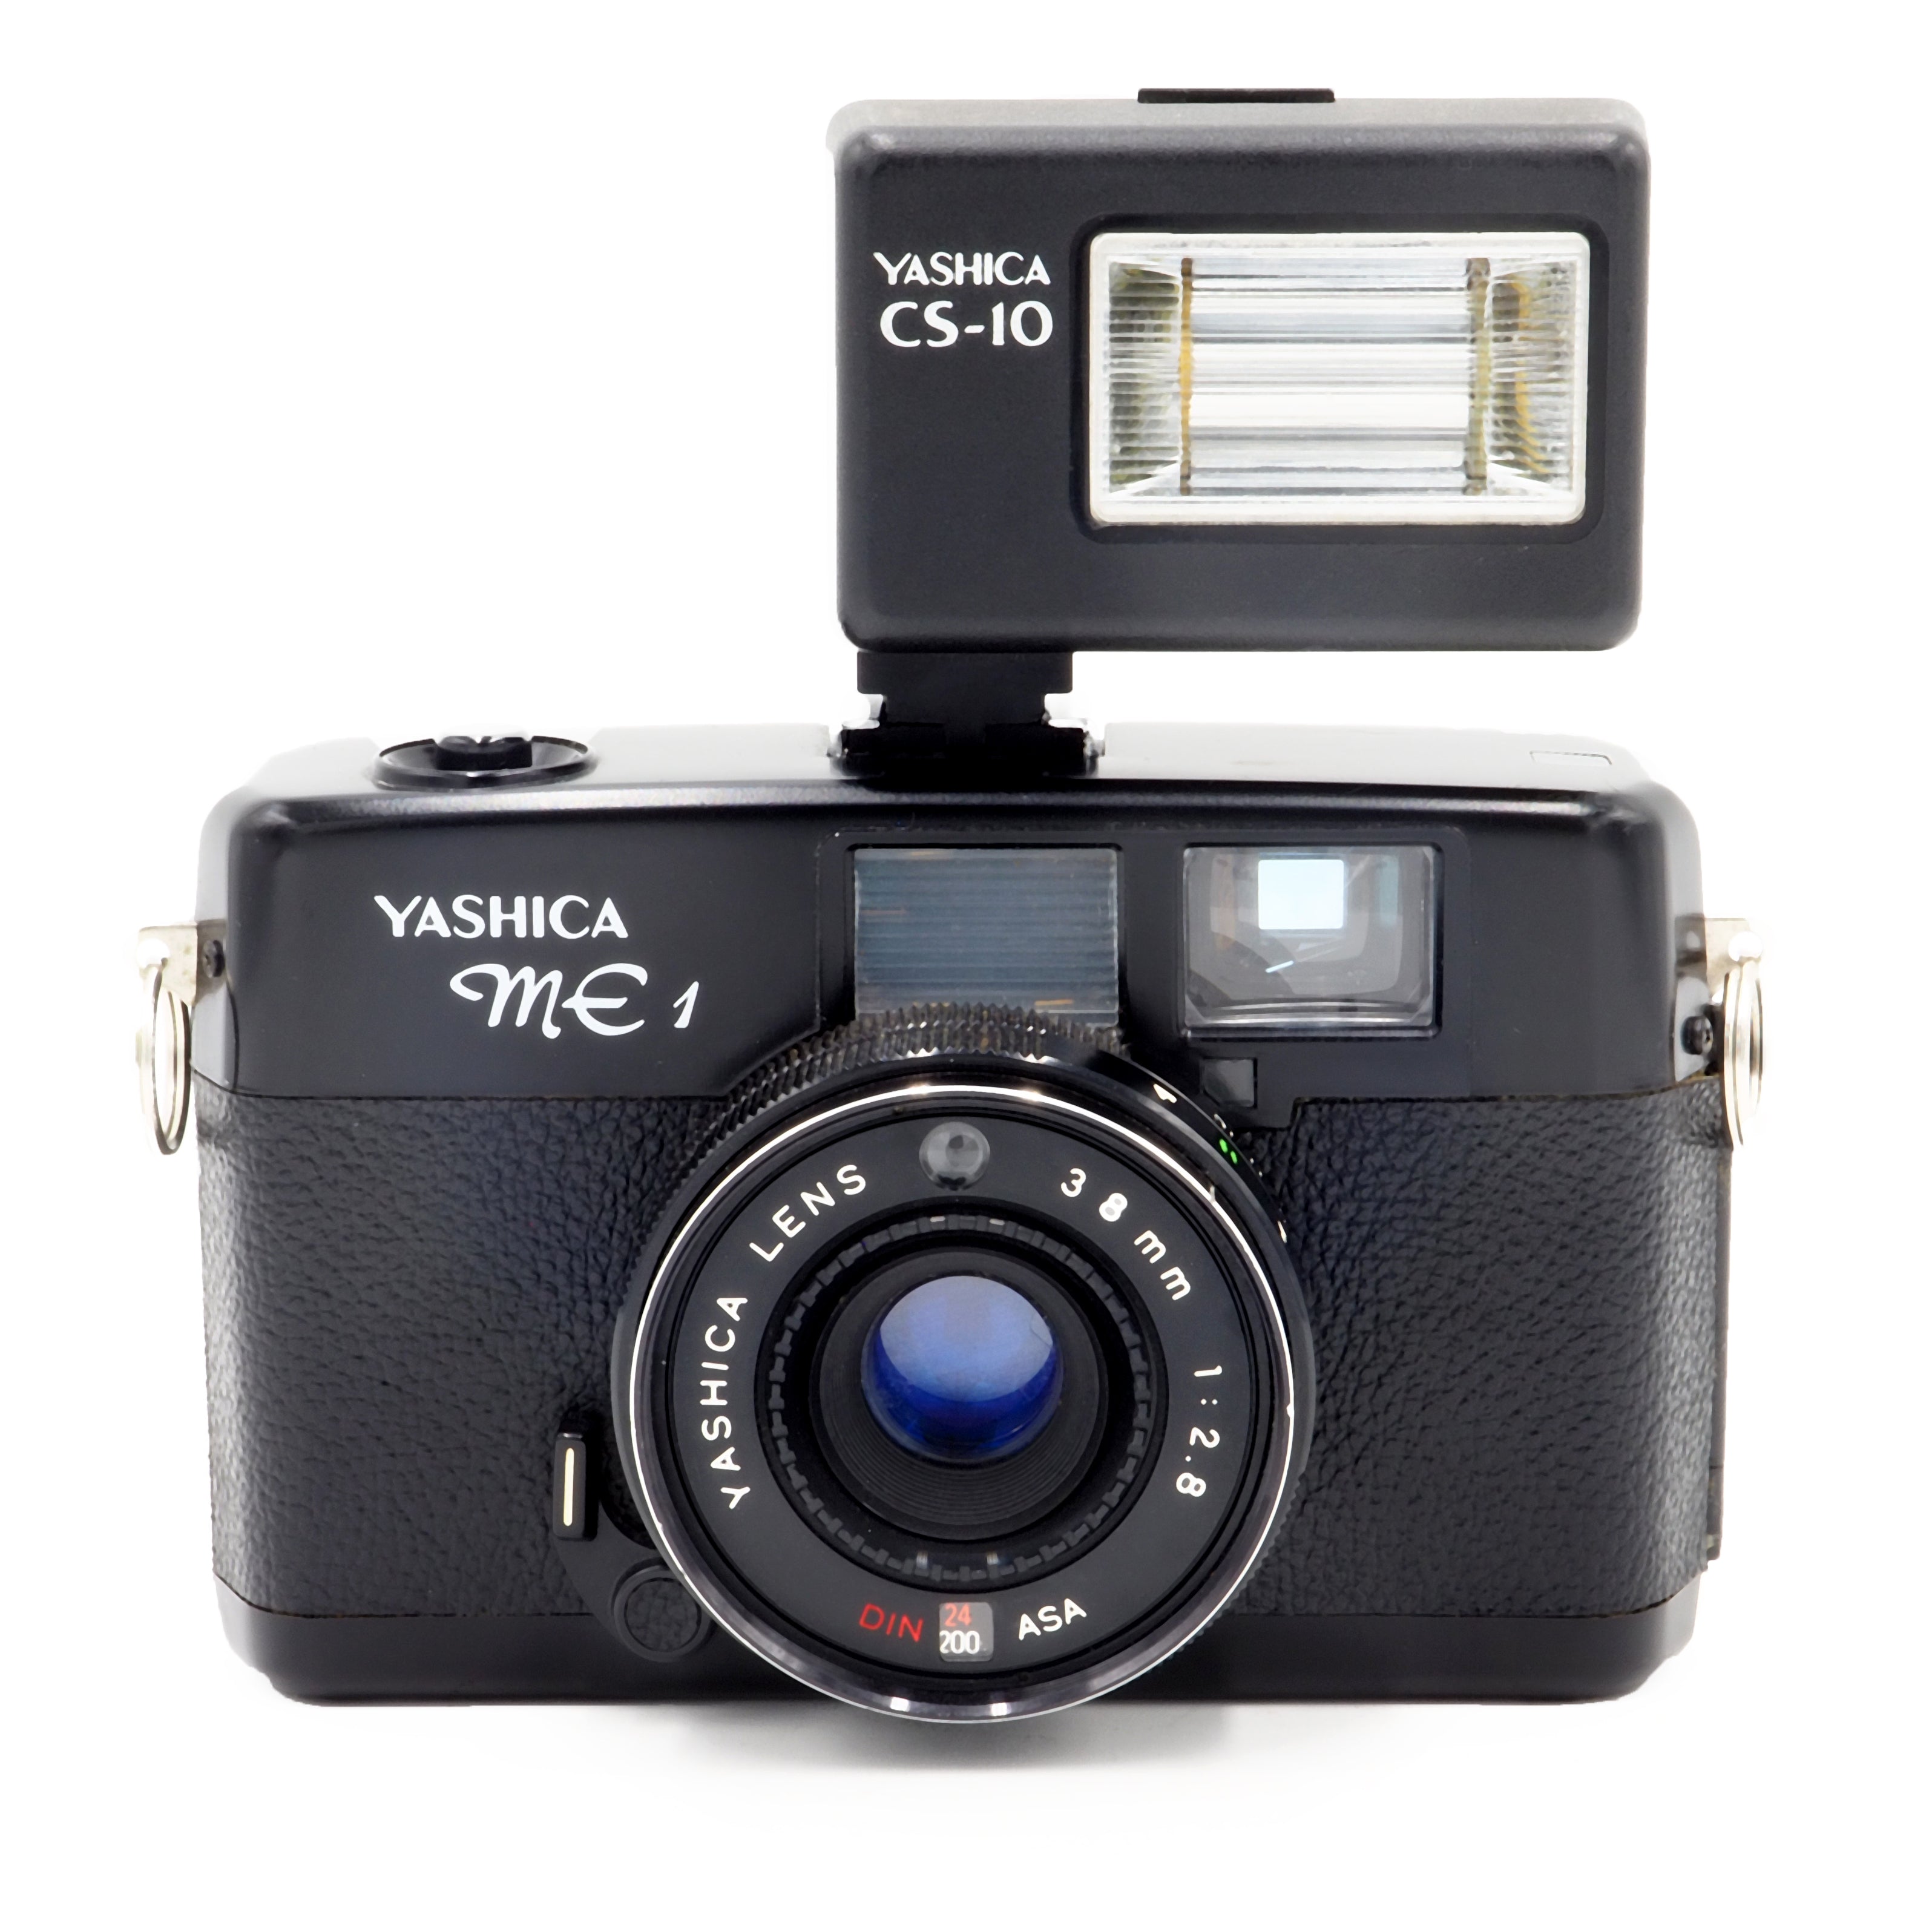 Yashica CS-201 Auto SLR 35mm camera flash perfect working order